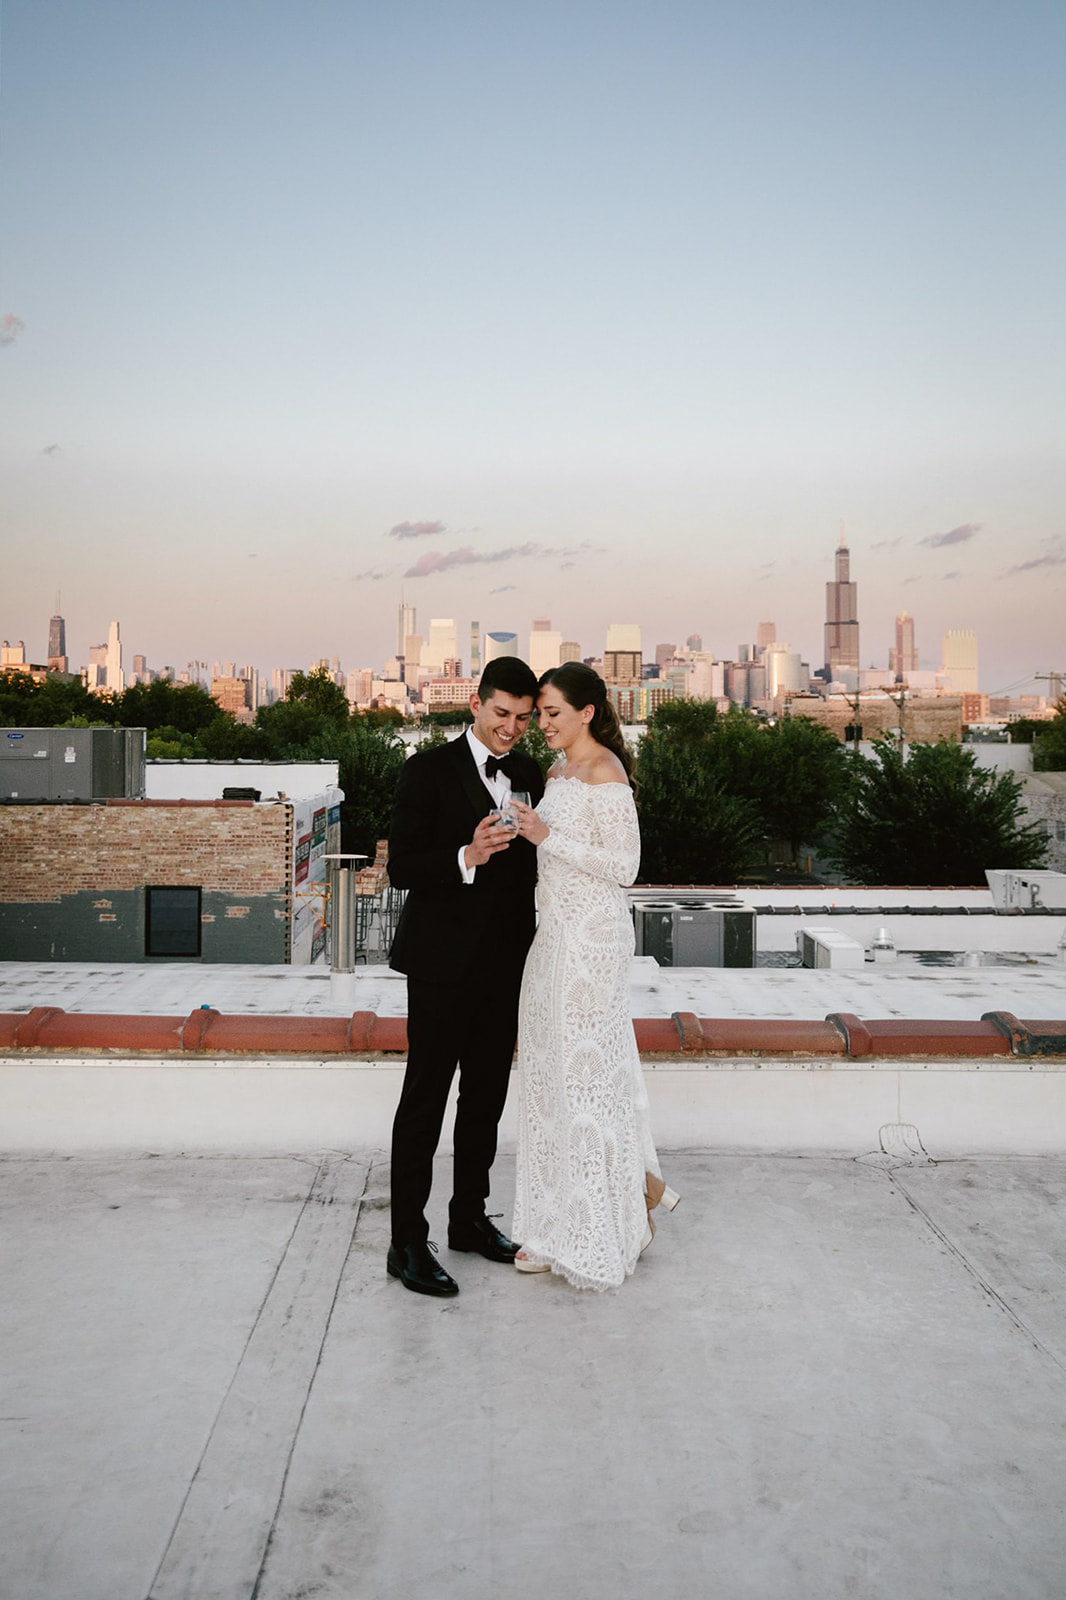 Urban Elegance: Couple enjoying champagne on Walden Chicago rooftop at sunset.